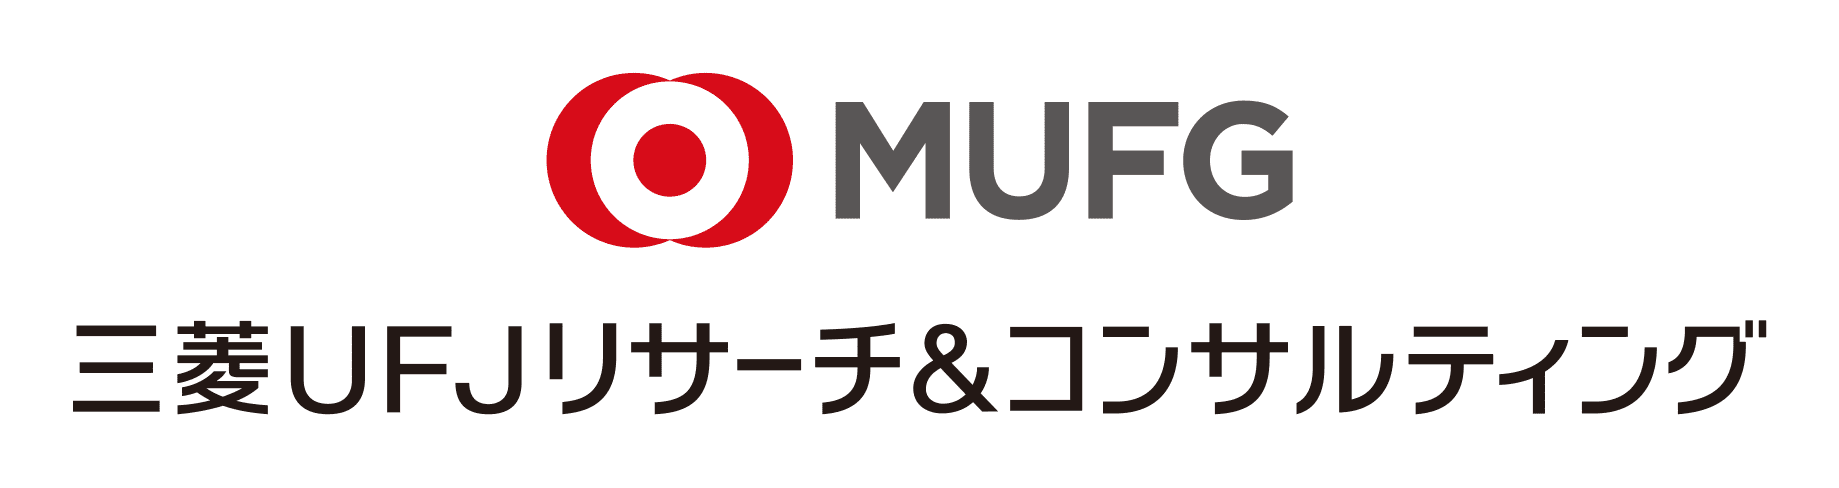 MURC様ロゴ